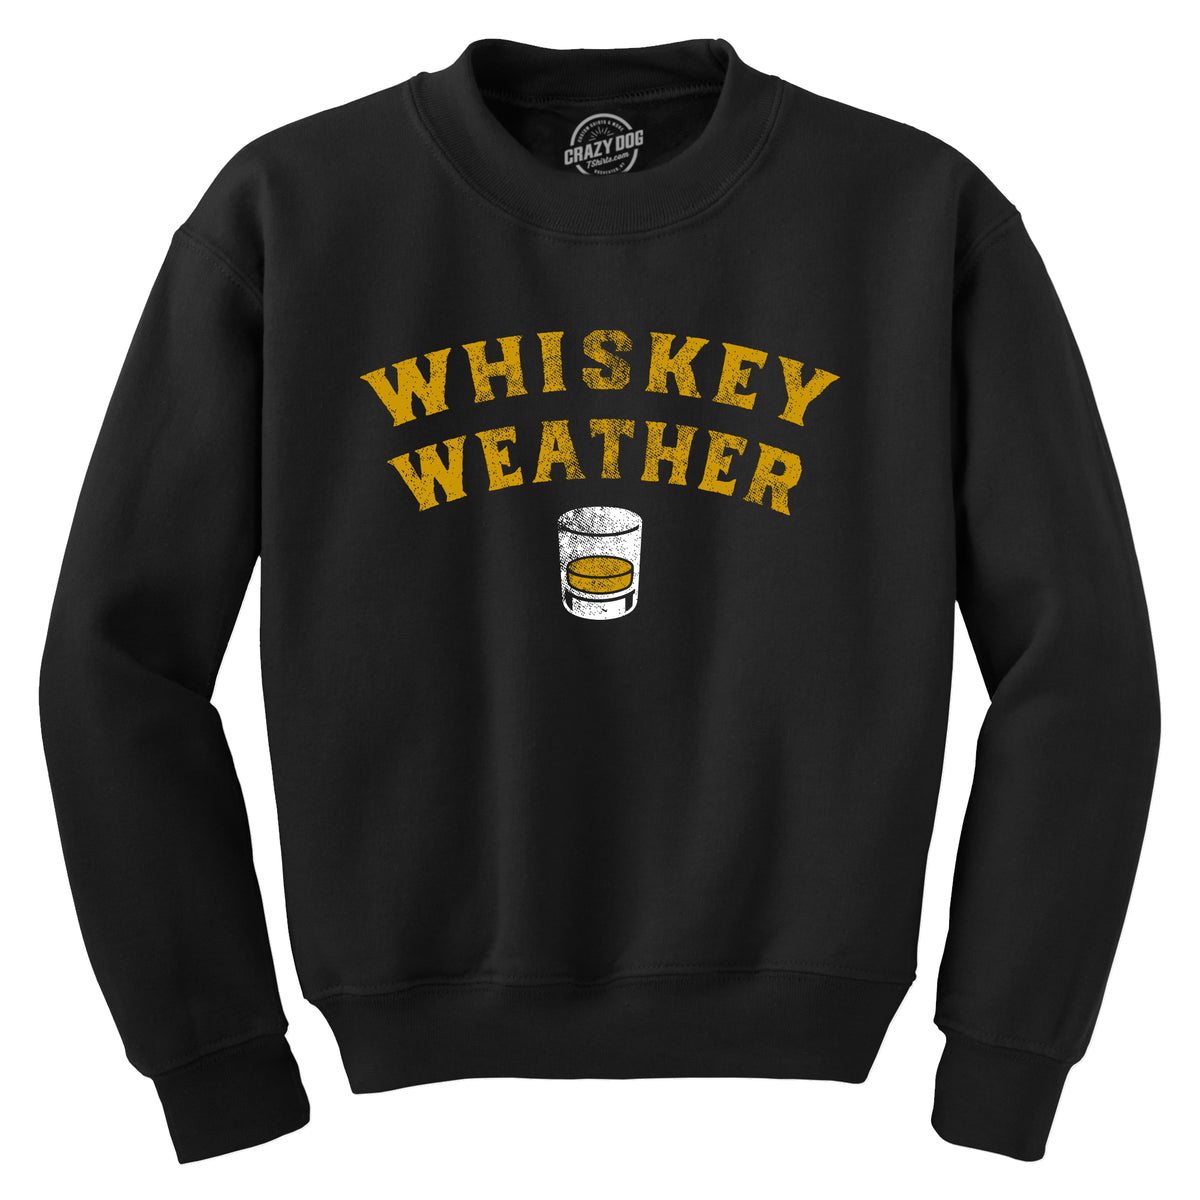 Funny Black - WHISKEY Whiskey Weather Sweatshirt Nerdy Liquor Drinking Tee